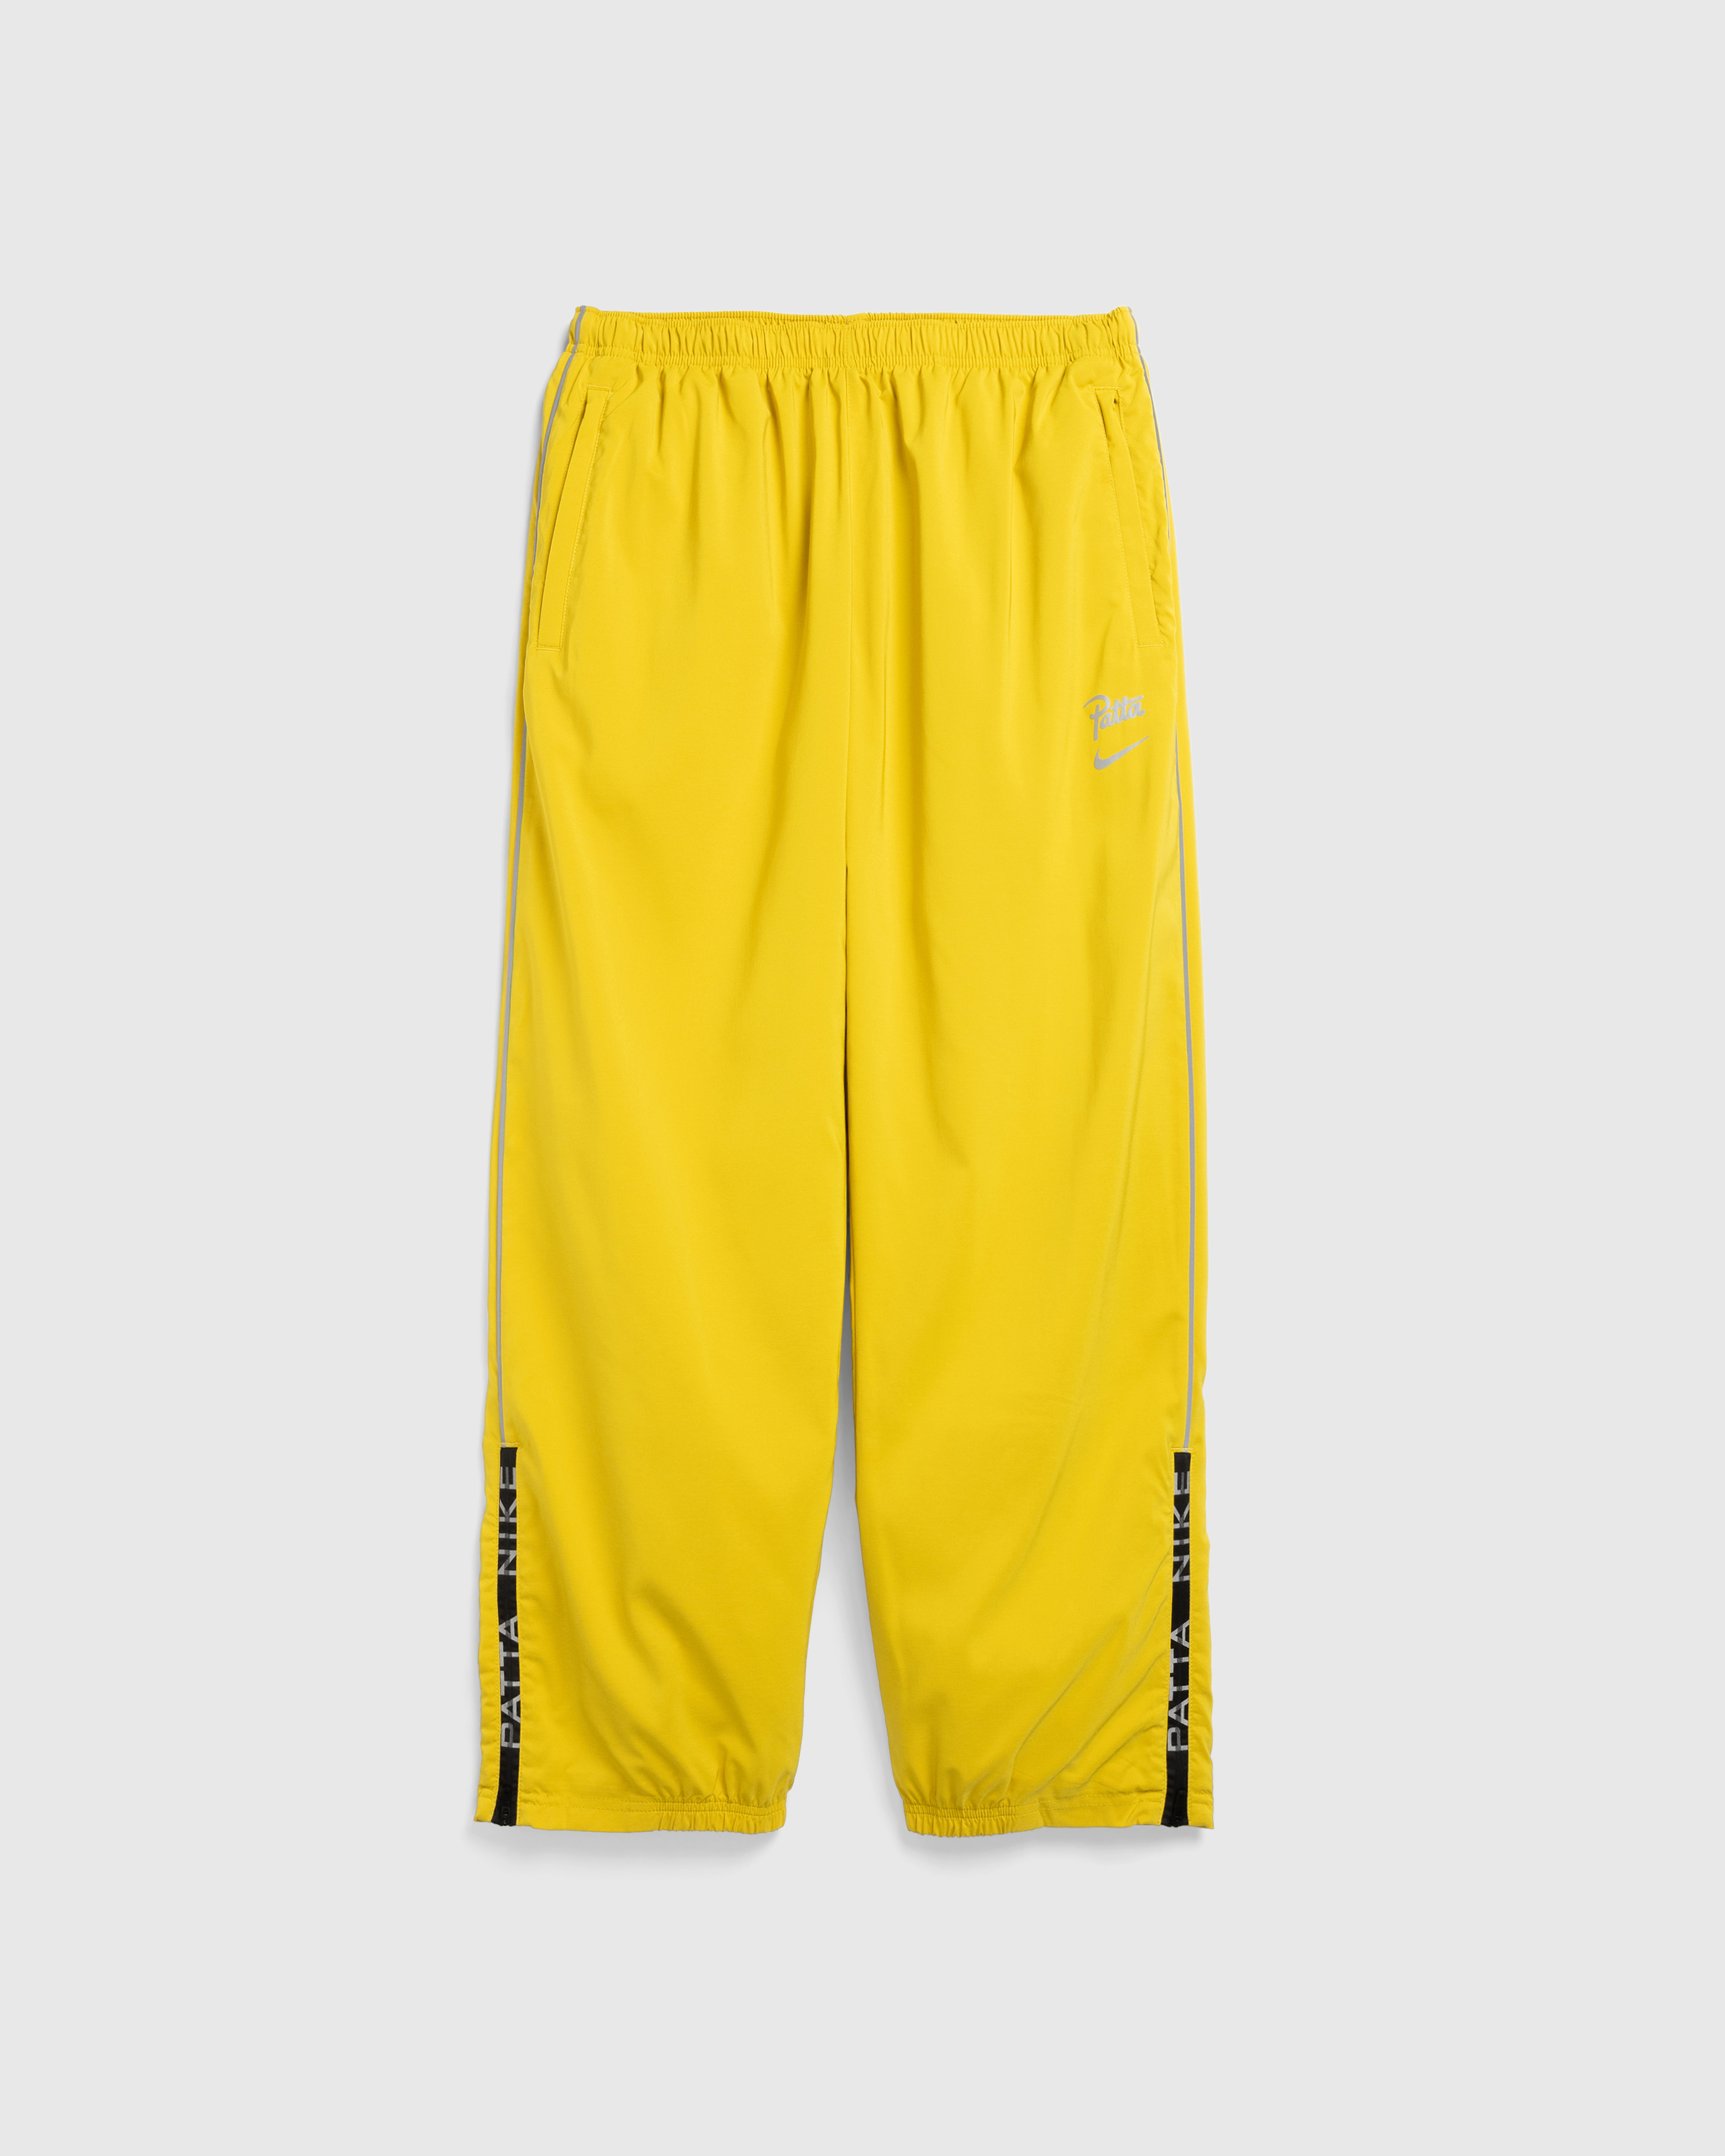 Nike x Patta – Men's Track Pants Saffron Quartz - Track Pants - Green - Image 1